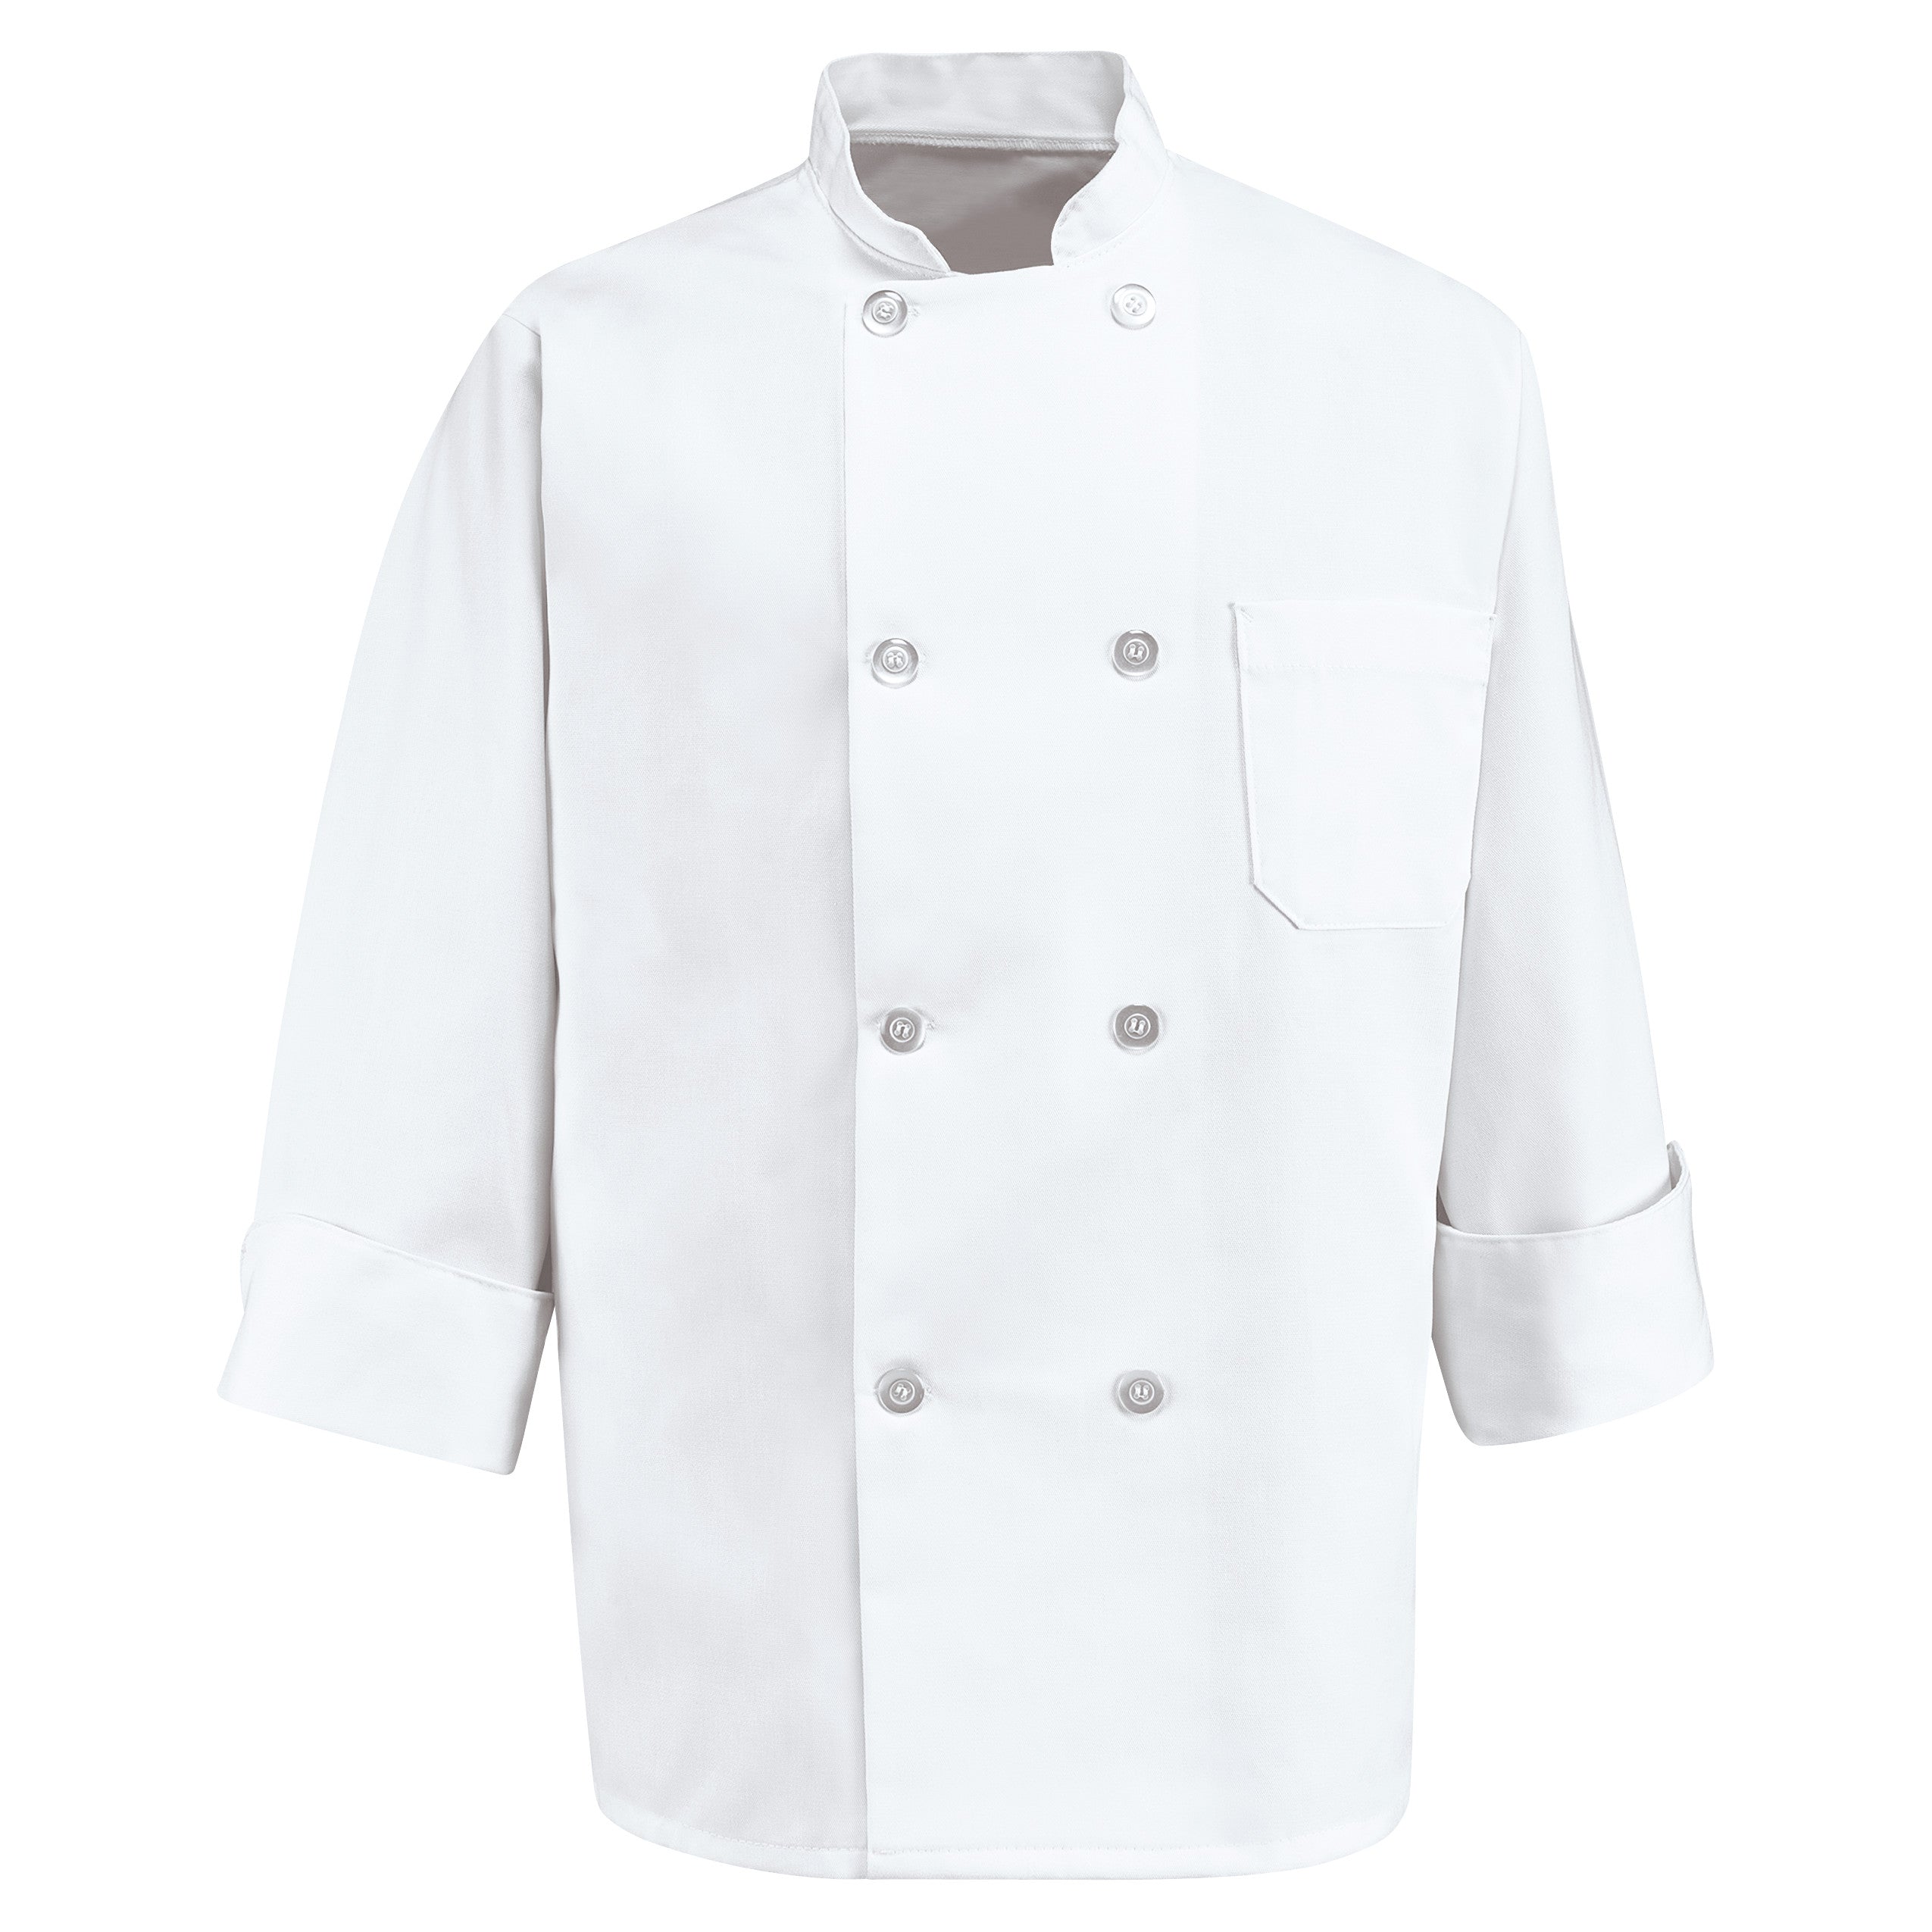 Eight Pearl Button Chef Coat 0403 - White